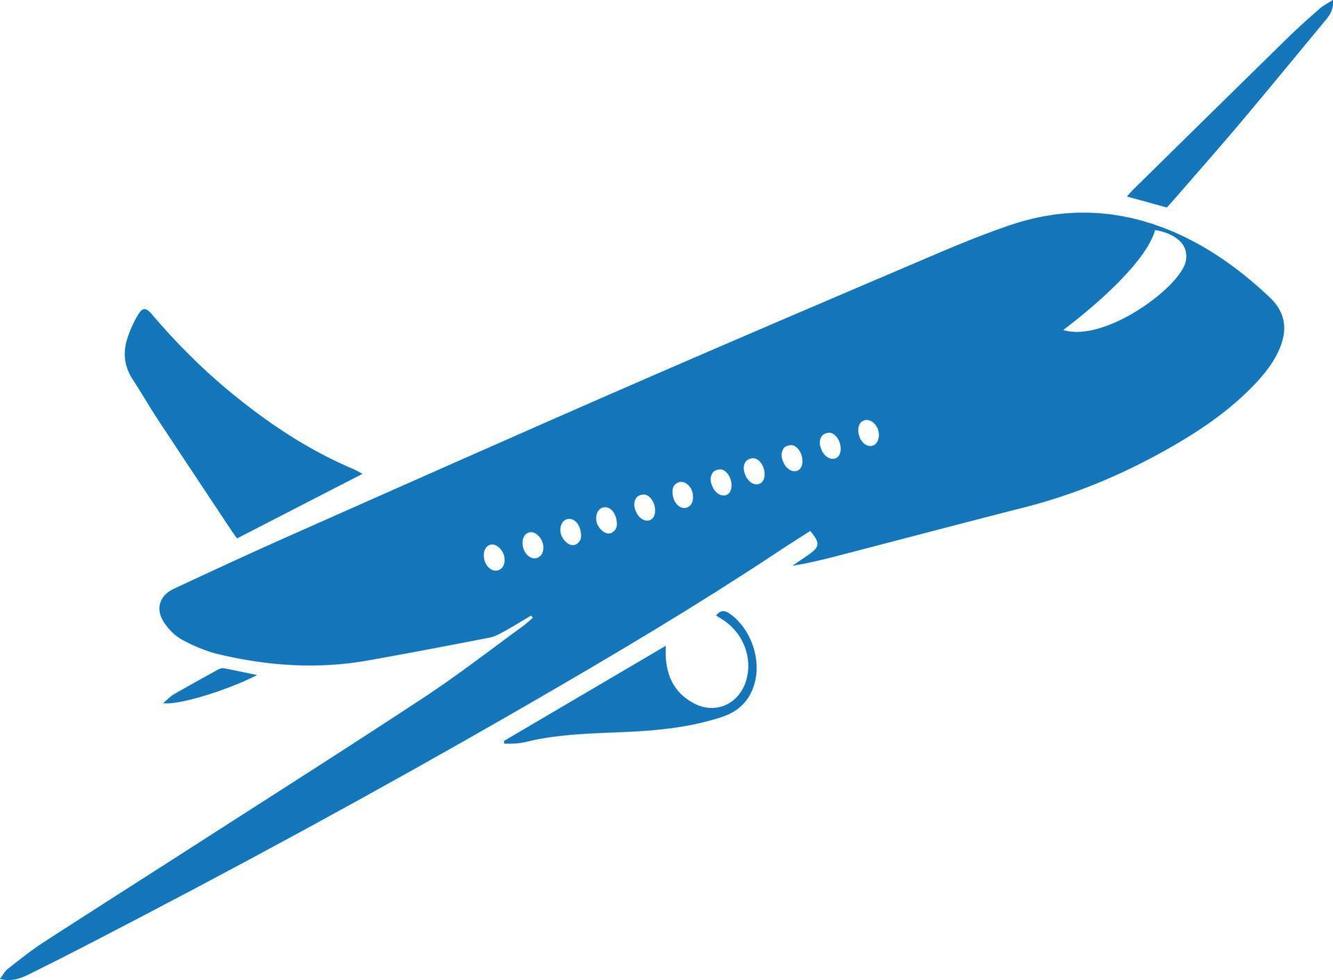 Flugzeug-Logo-Vektor-illustration Flugzeug-Silhouette-Design vektor